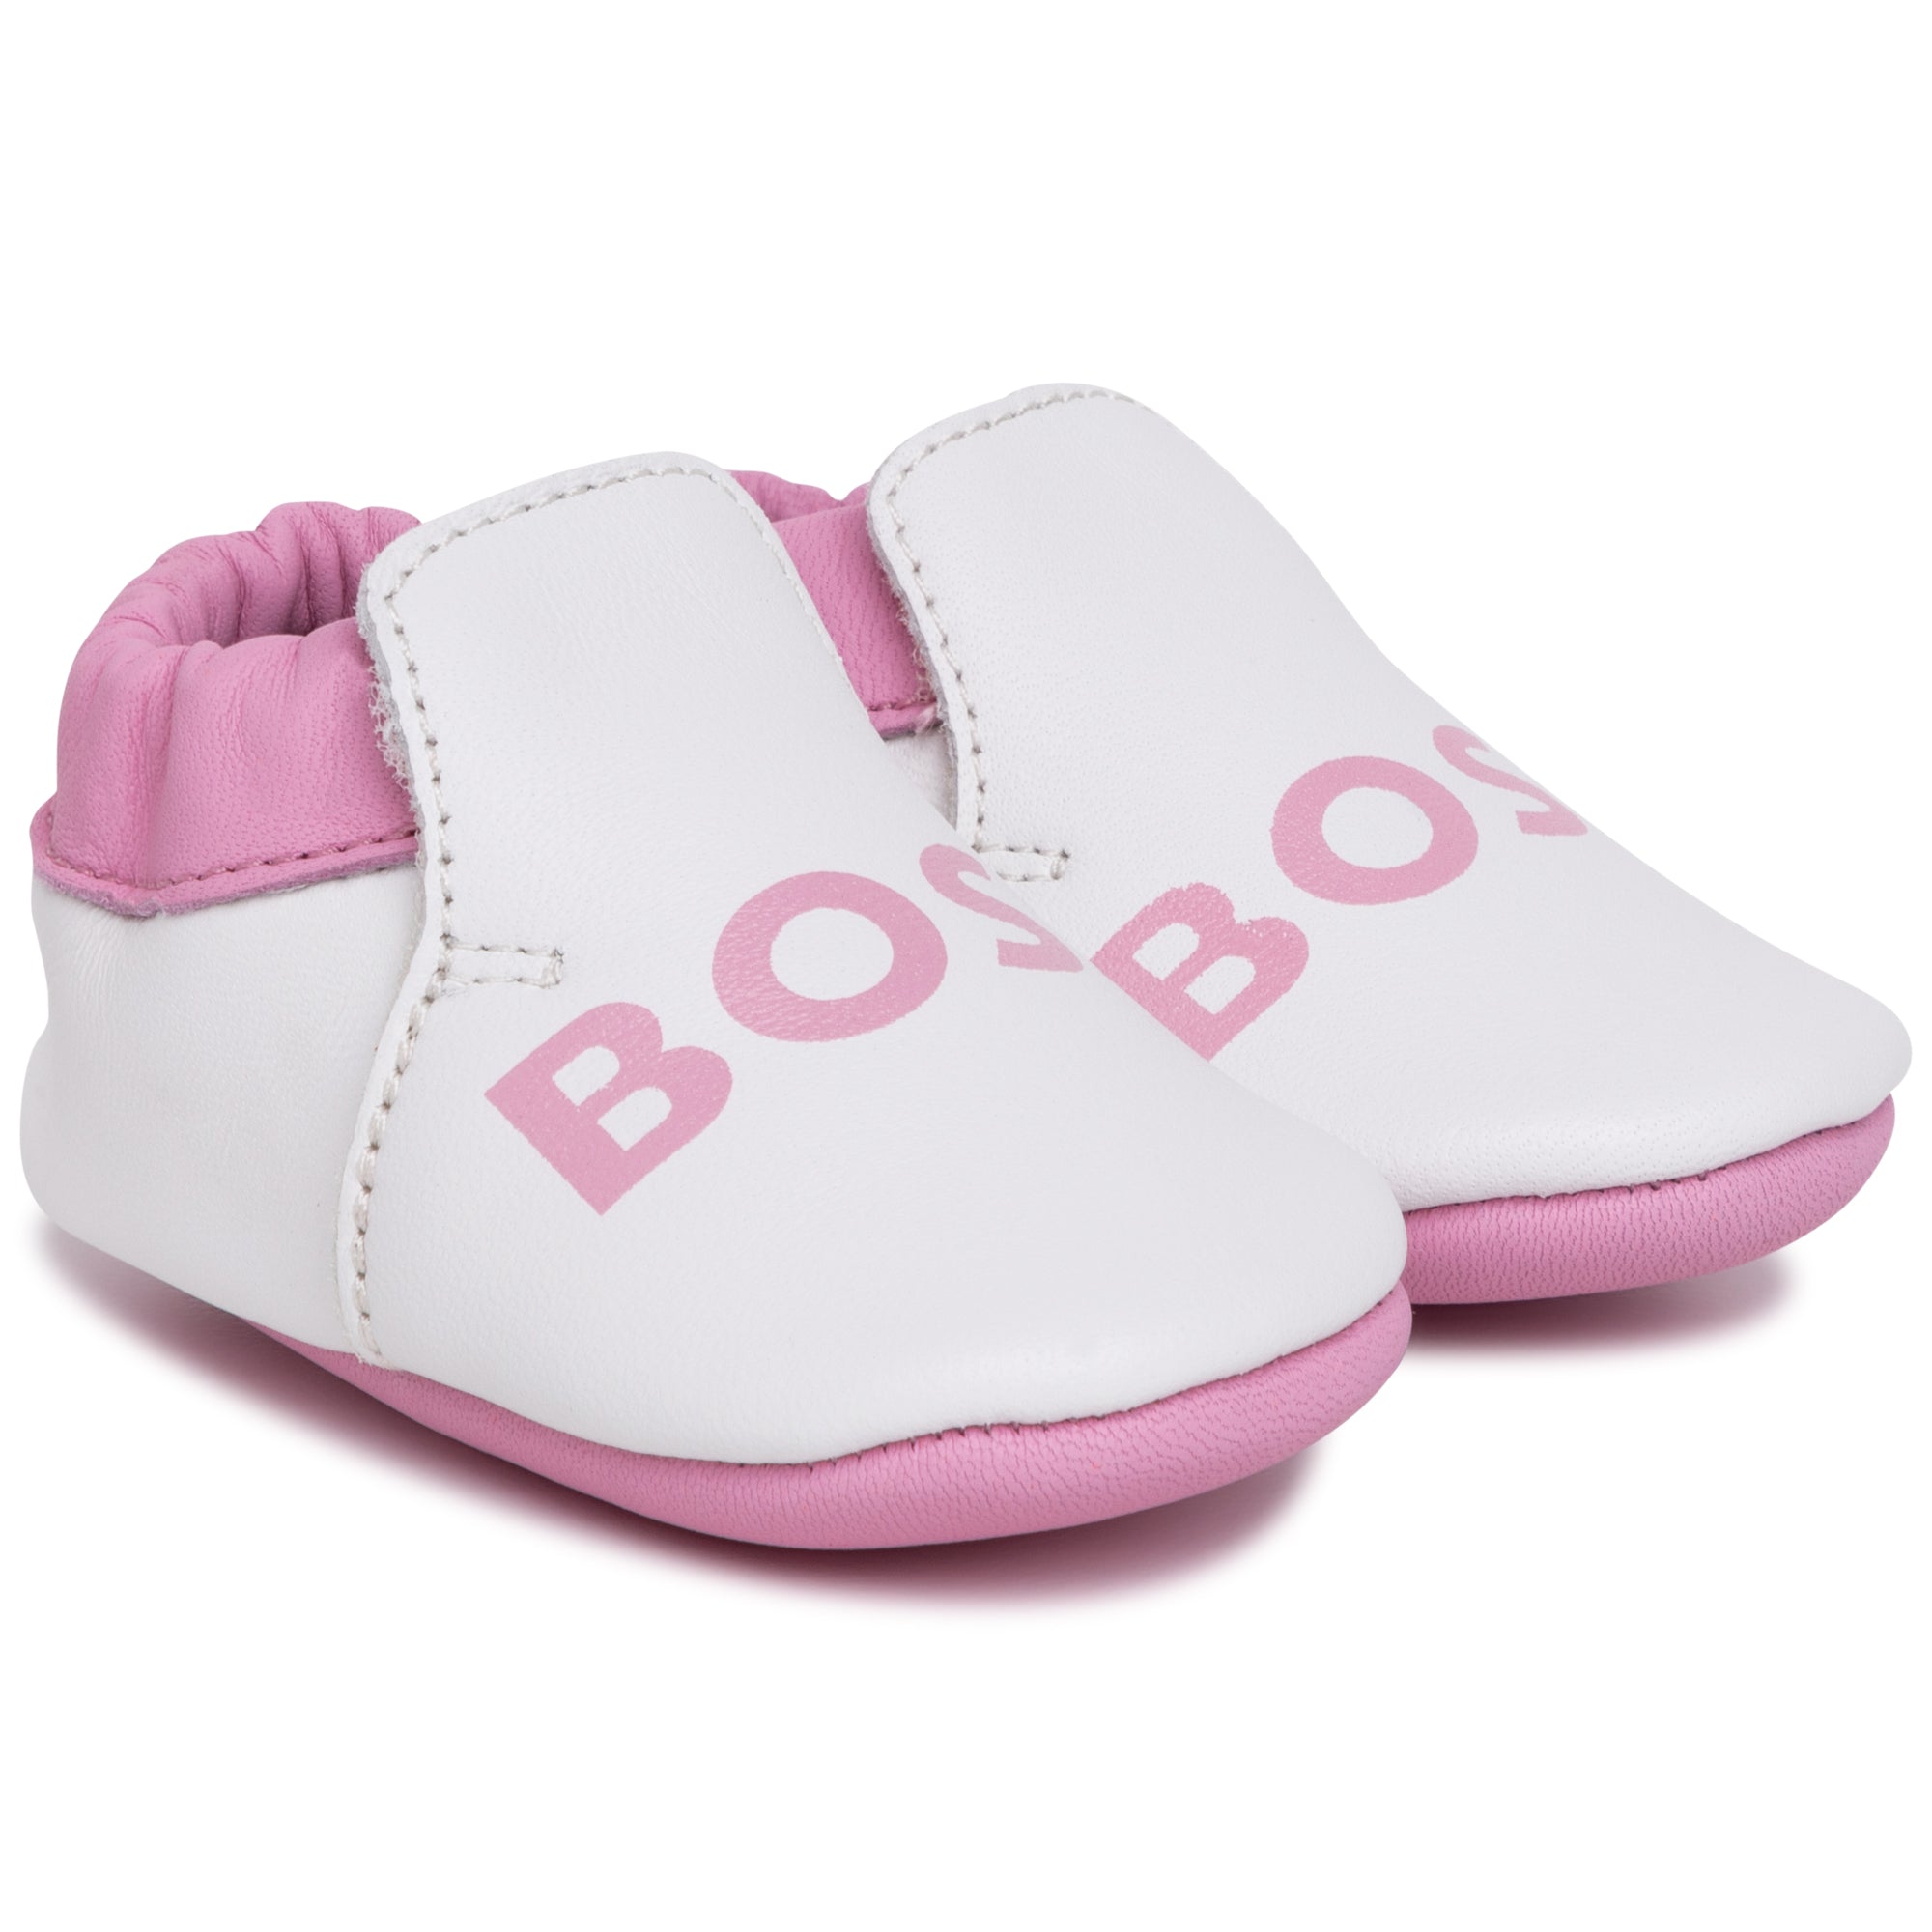 Hugo Boss Baby Girls Soft Shoes